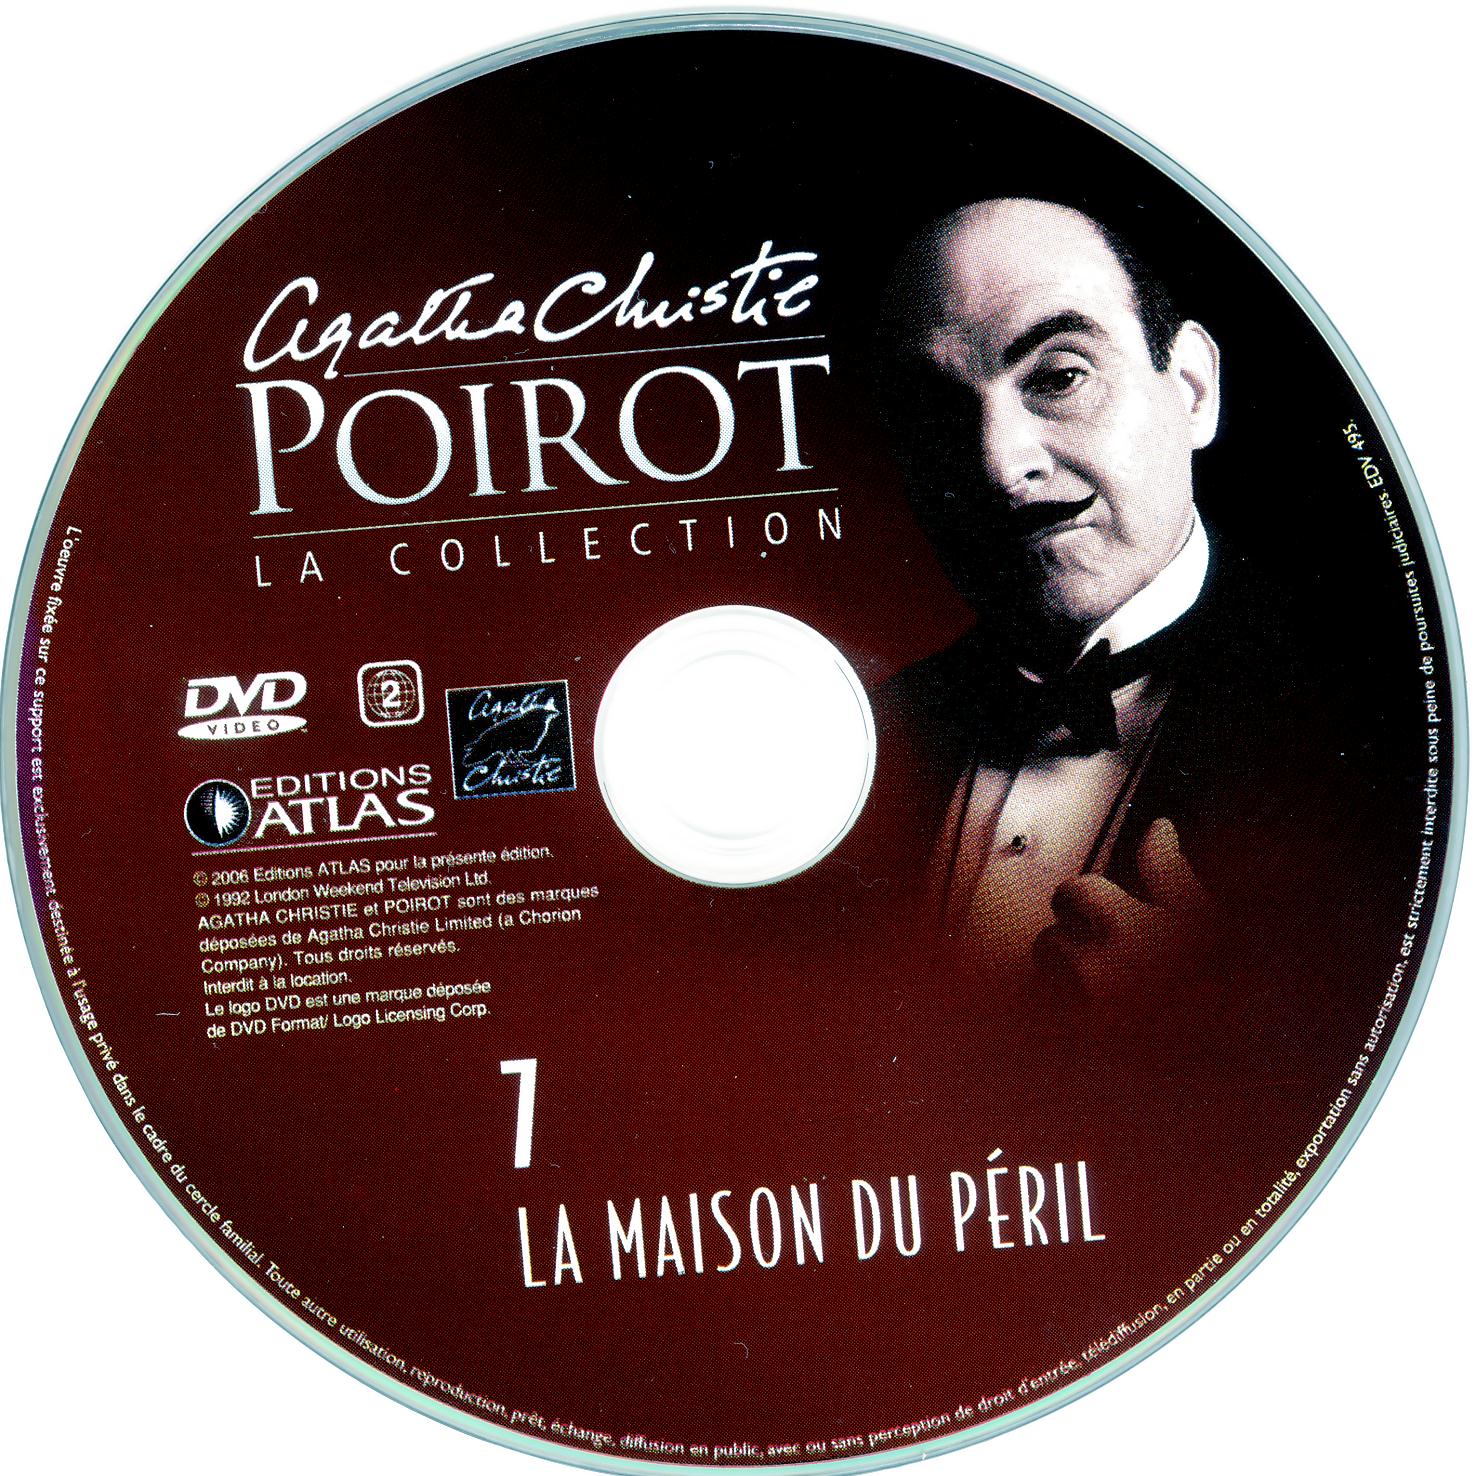 Hercule Poirot vol 7